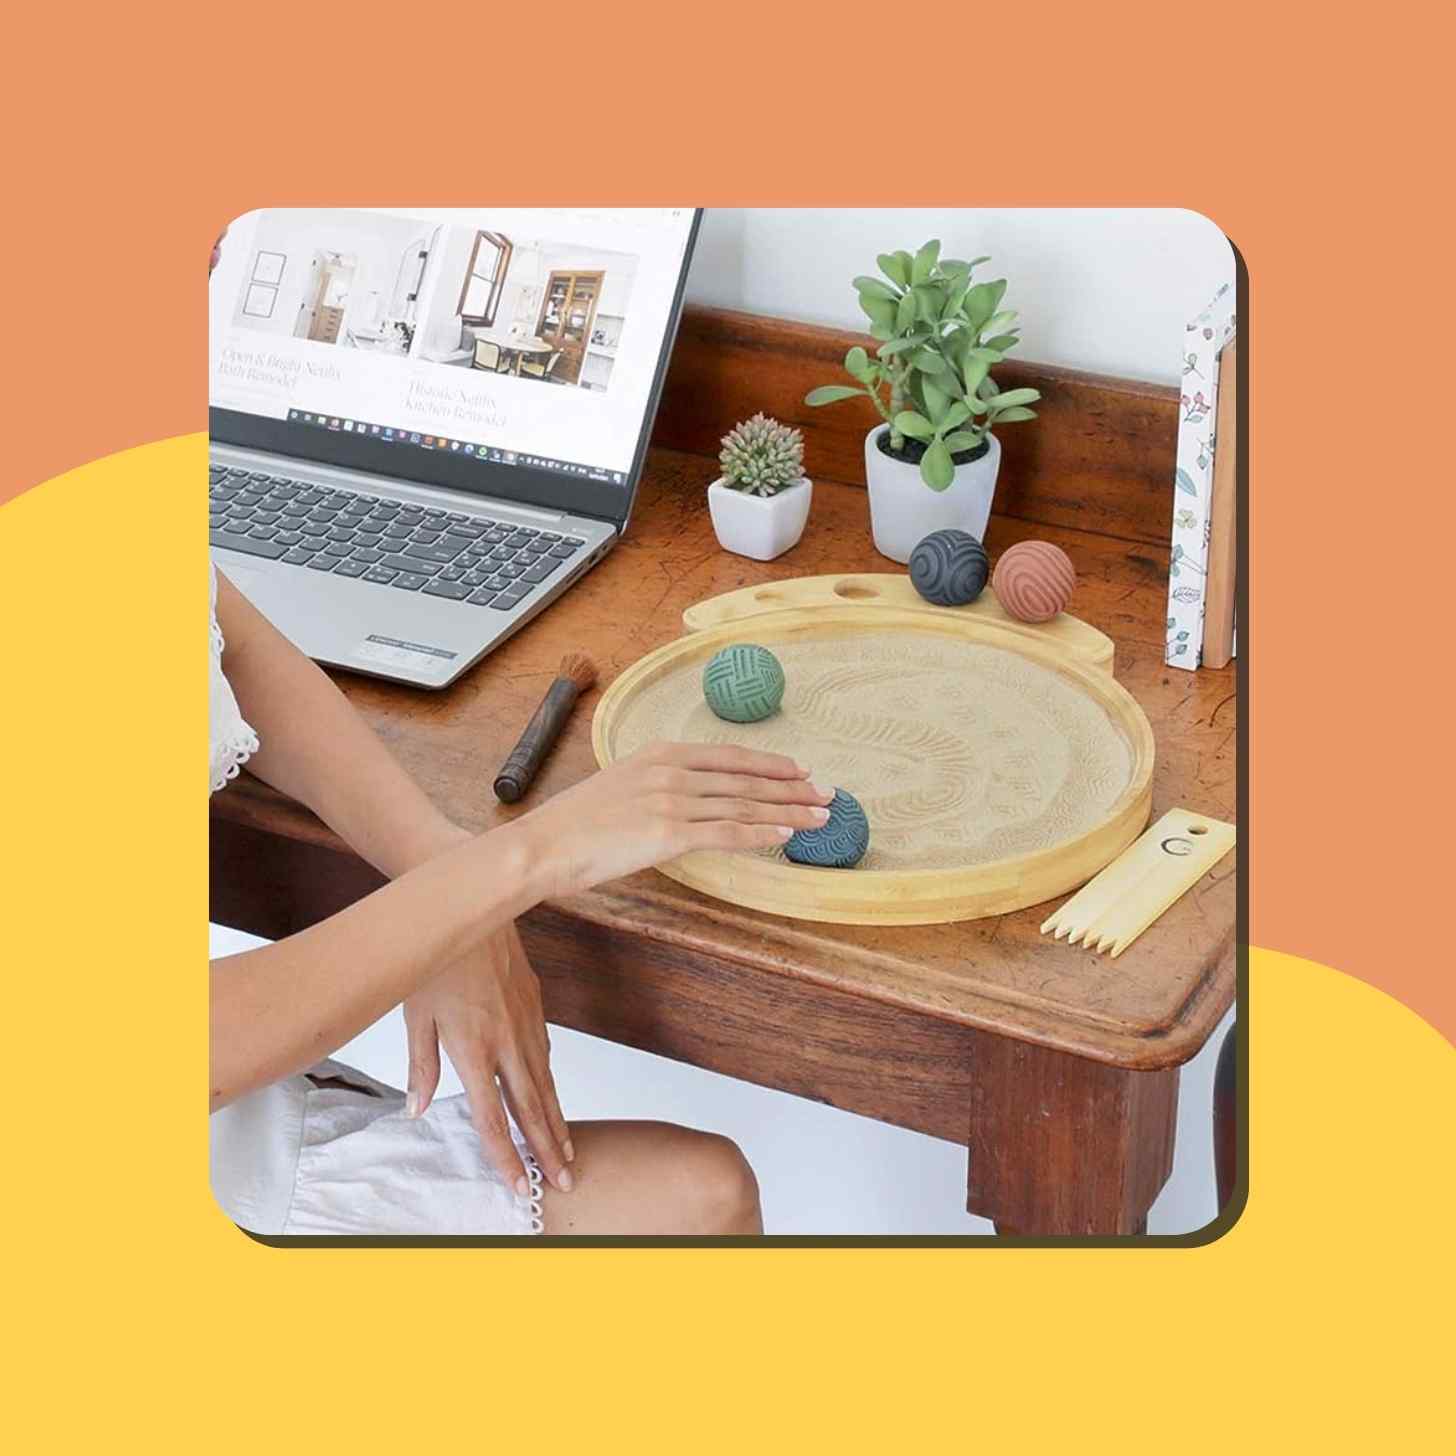 A Person Touching A Tabletop Zen Garden Next To Their Laptop Setup